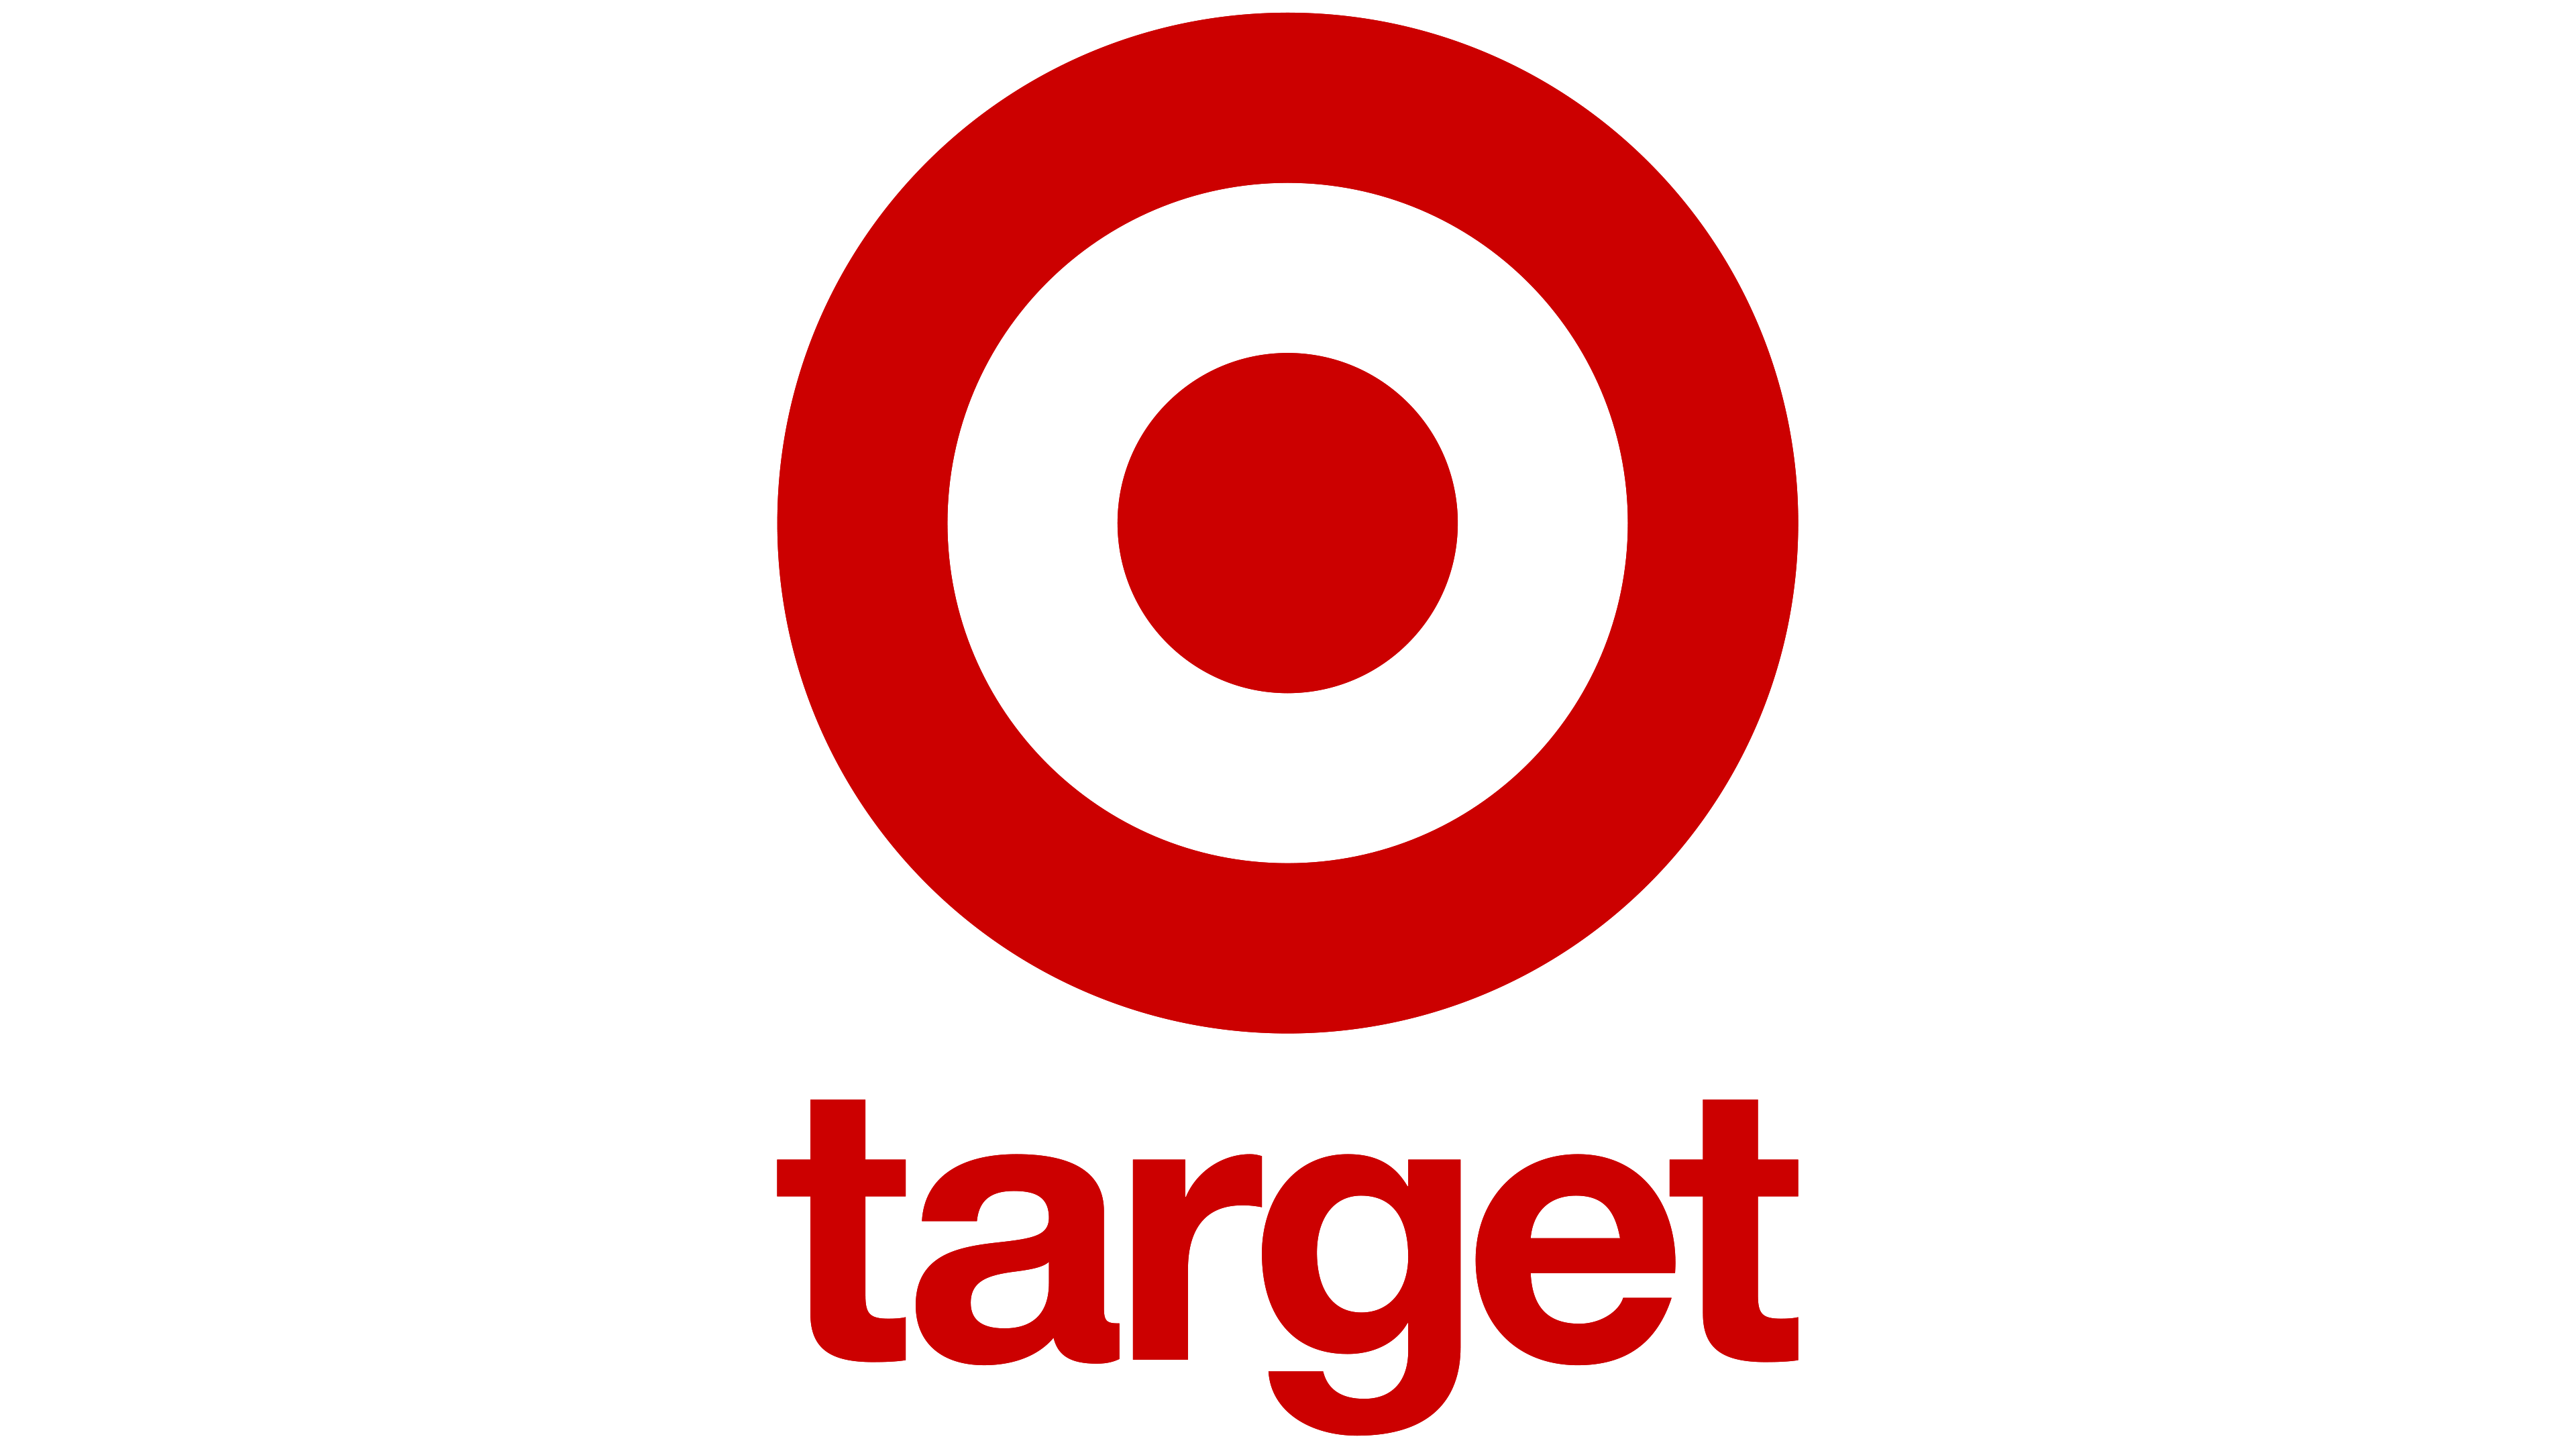 Adobe Target Logo Png PNG Image Collection